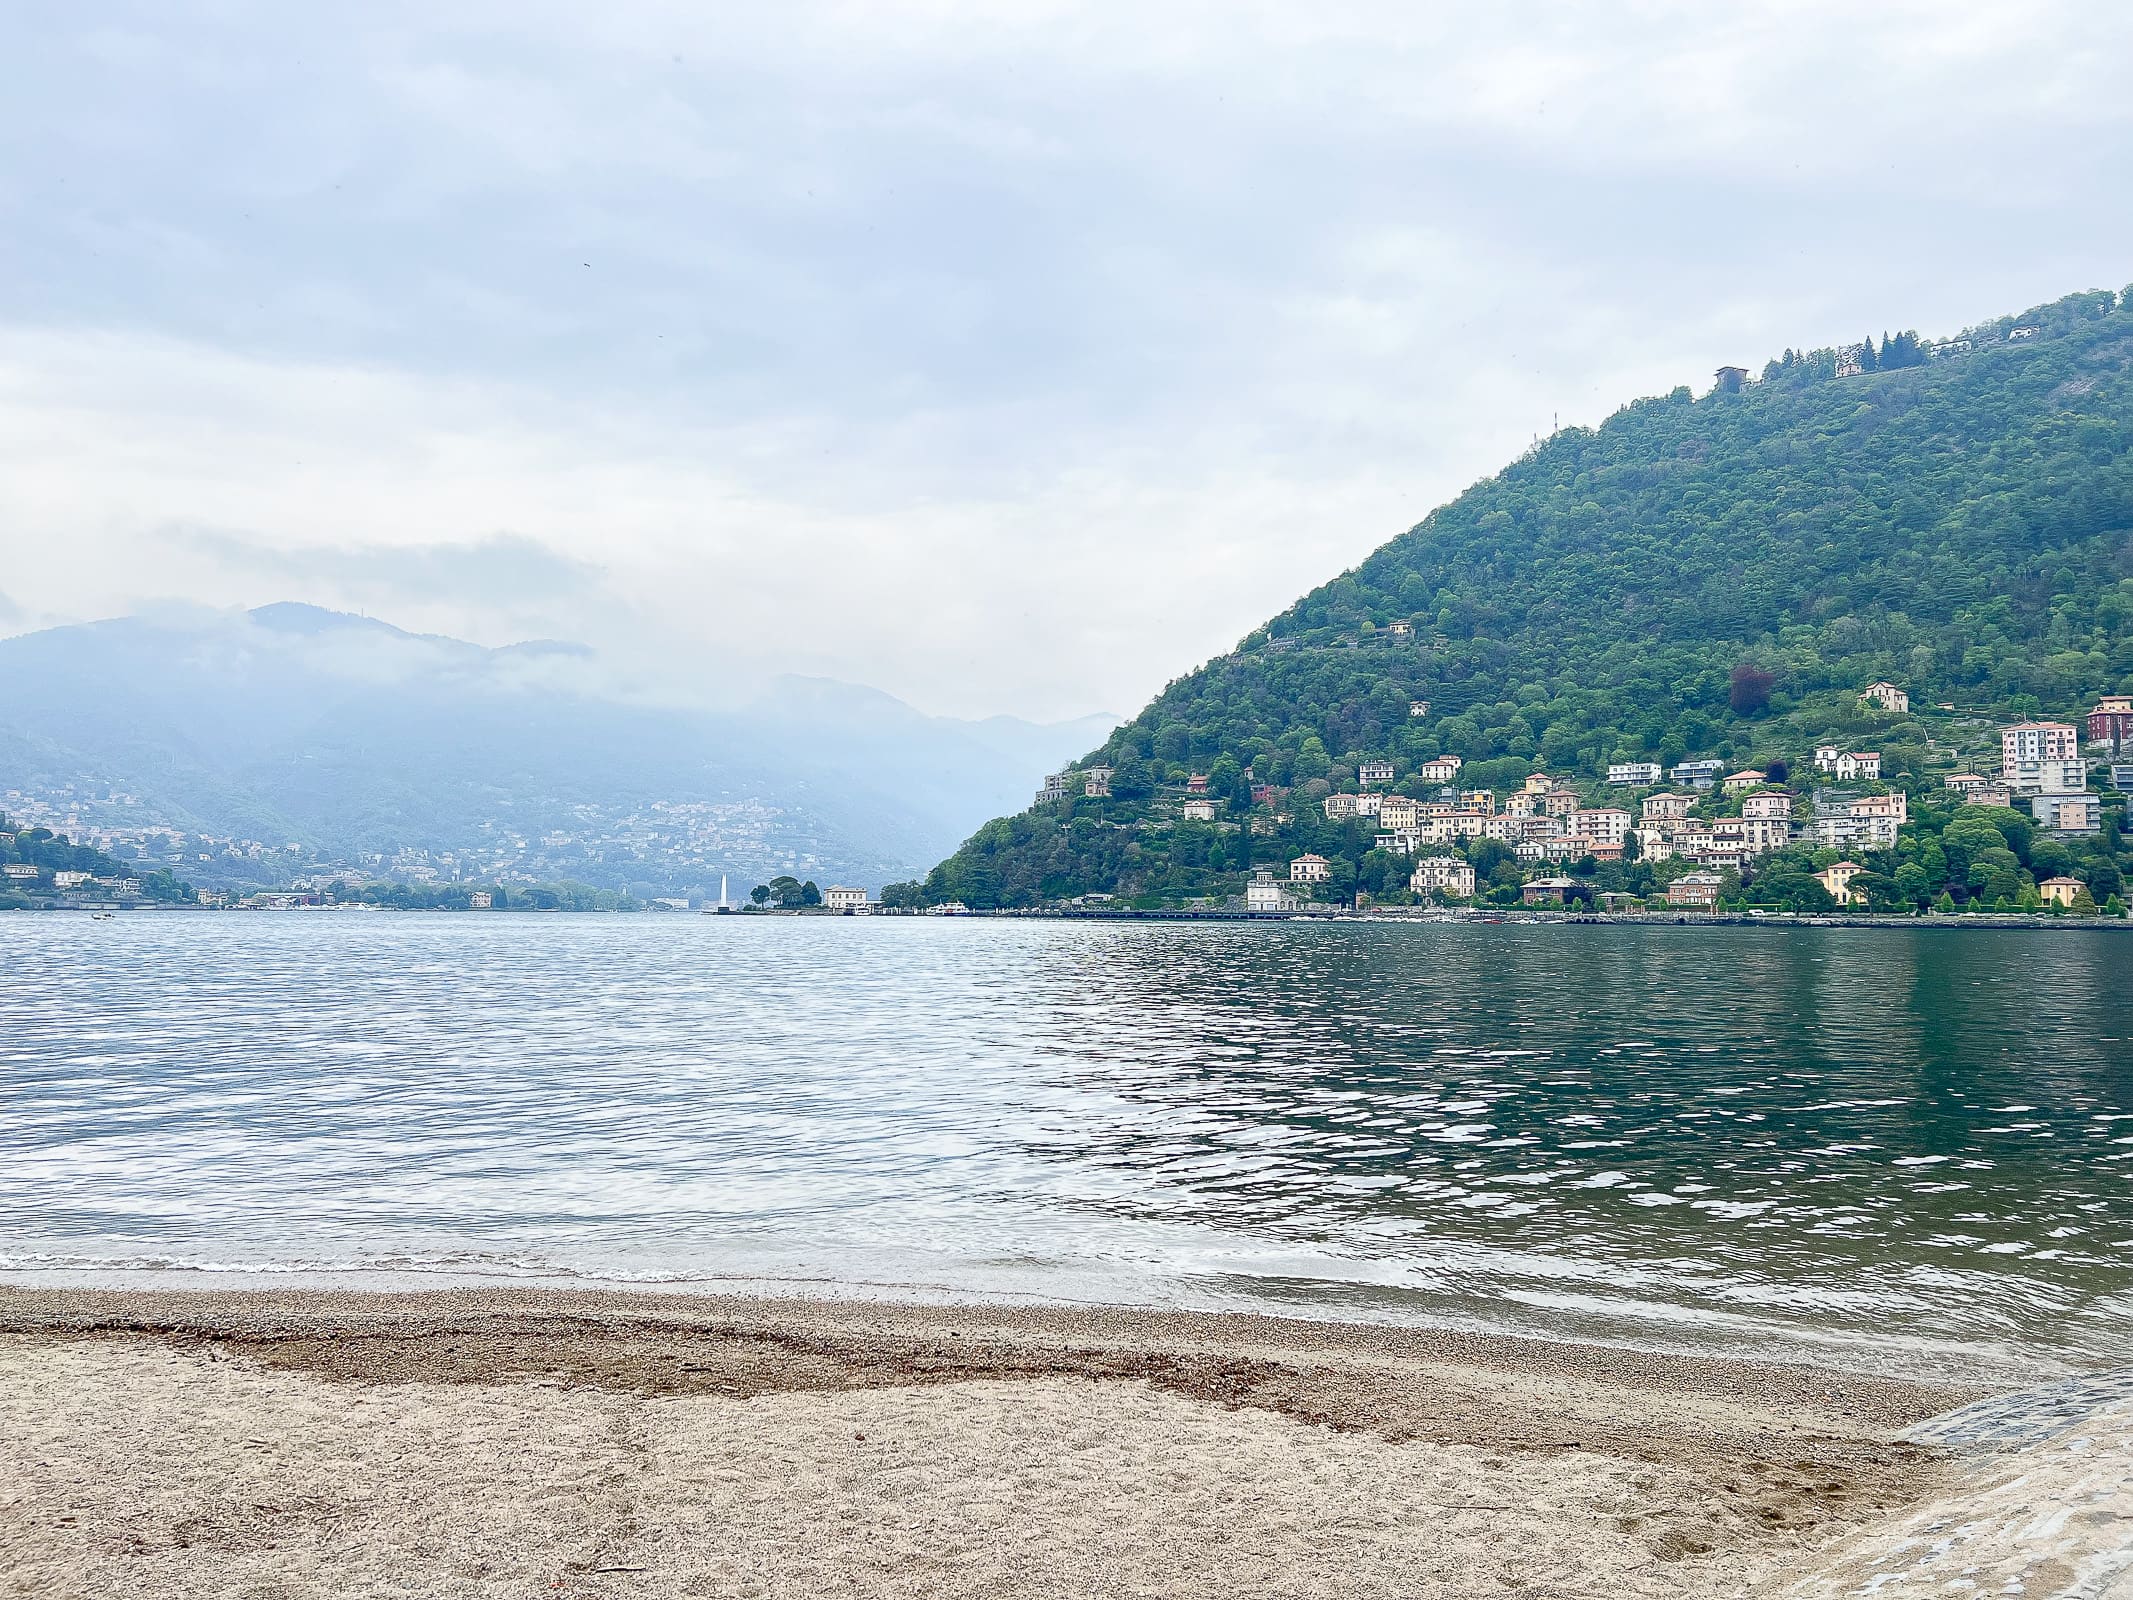 Visiting Lake Como in Italy